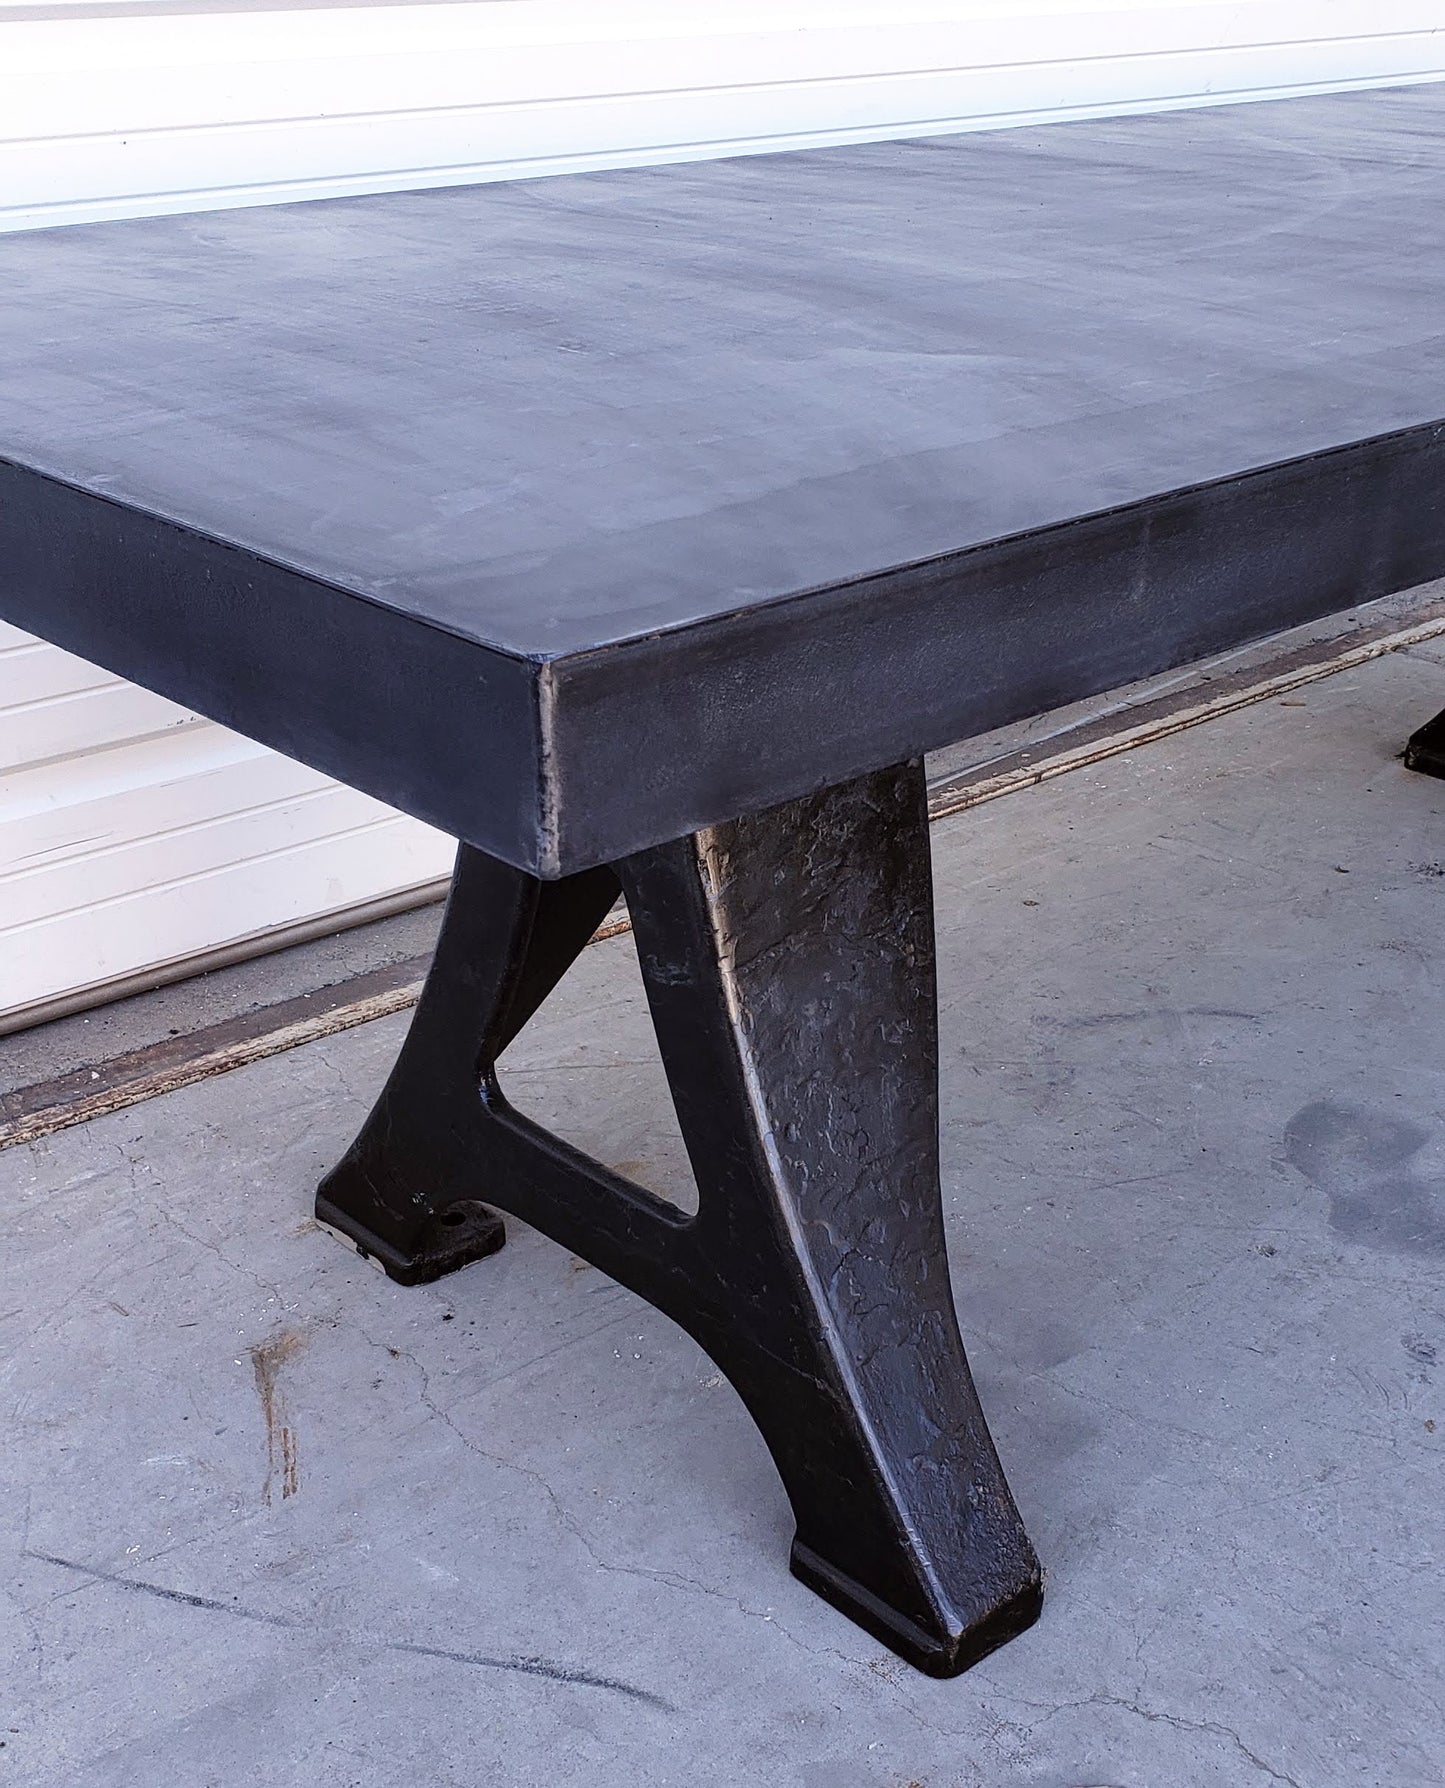 8' Industrial Steel Dining Table